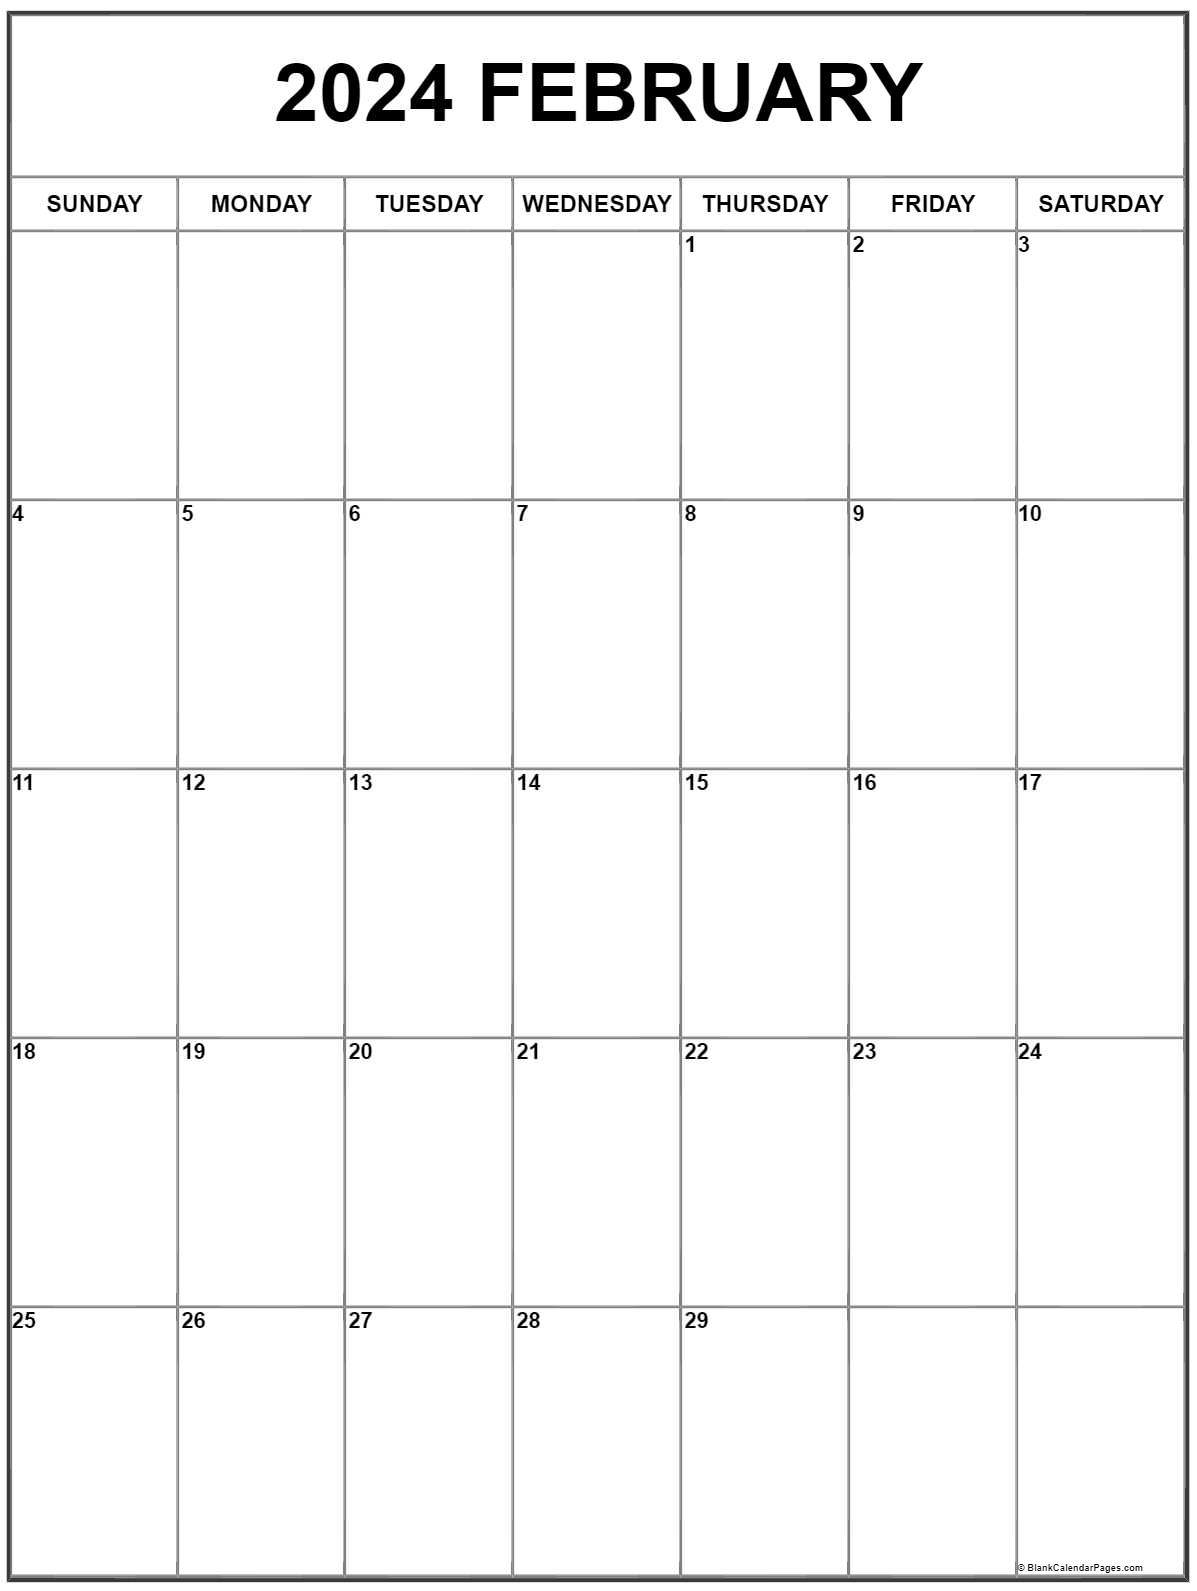 February 2024 Vertical Calendar | Portrait for February 2024 Calendar Printable Vertical